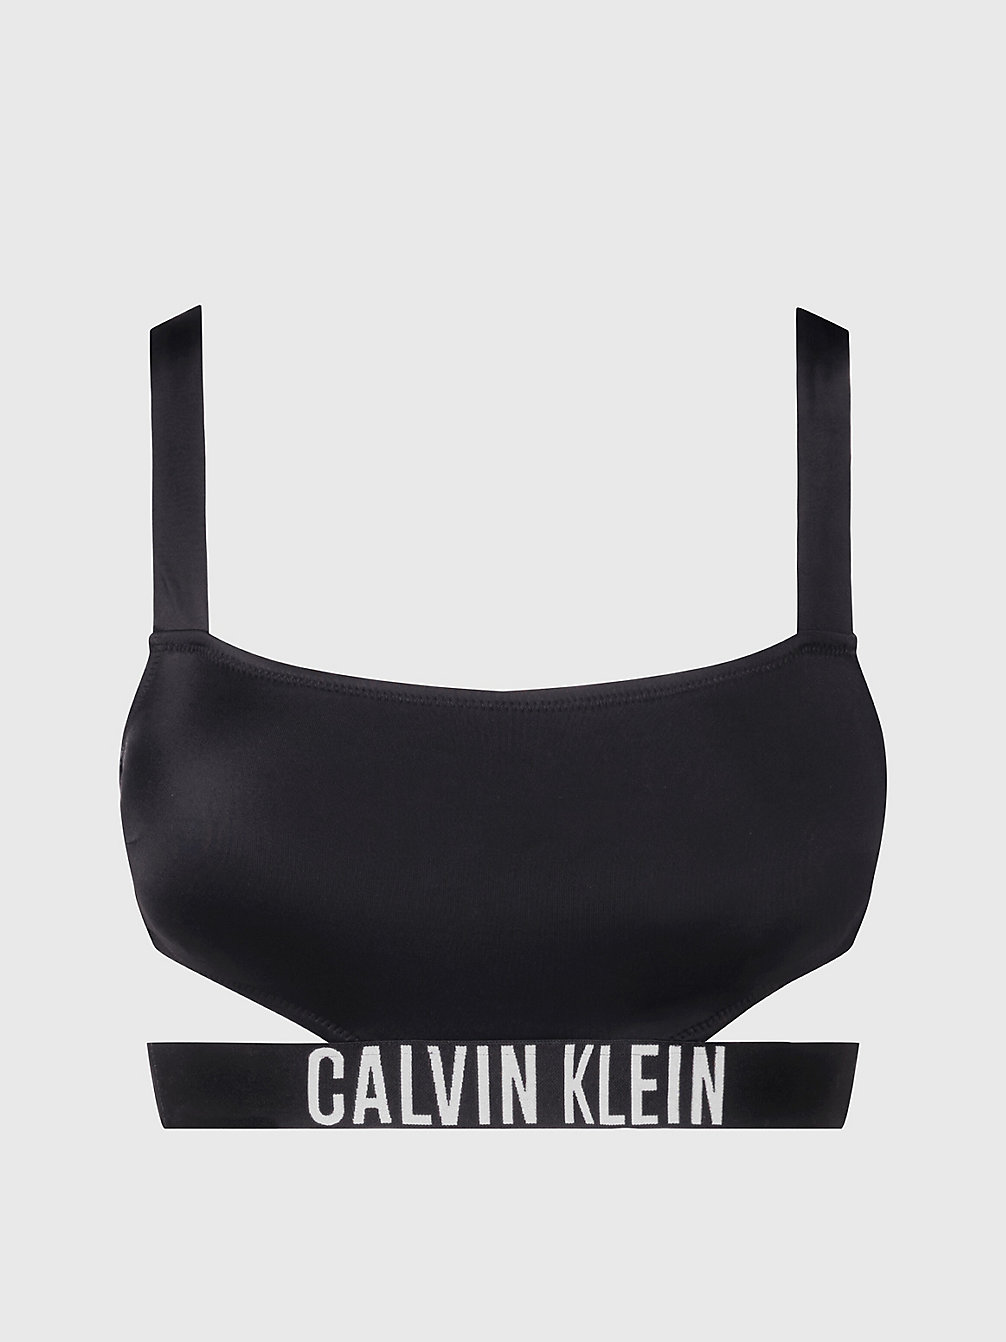 PVH BLACK Bralette Bikini Top - Intense Power undefined women Calvin Klein